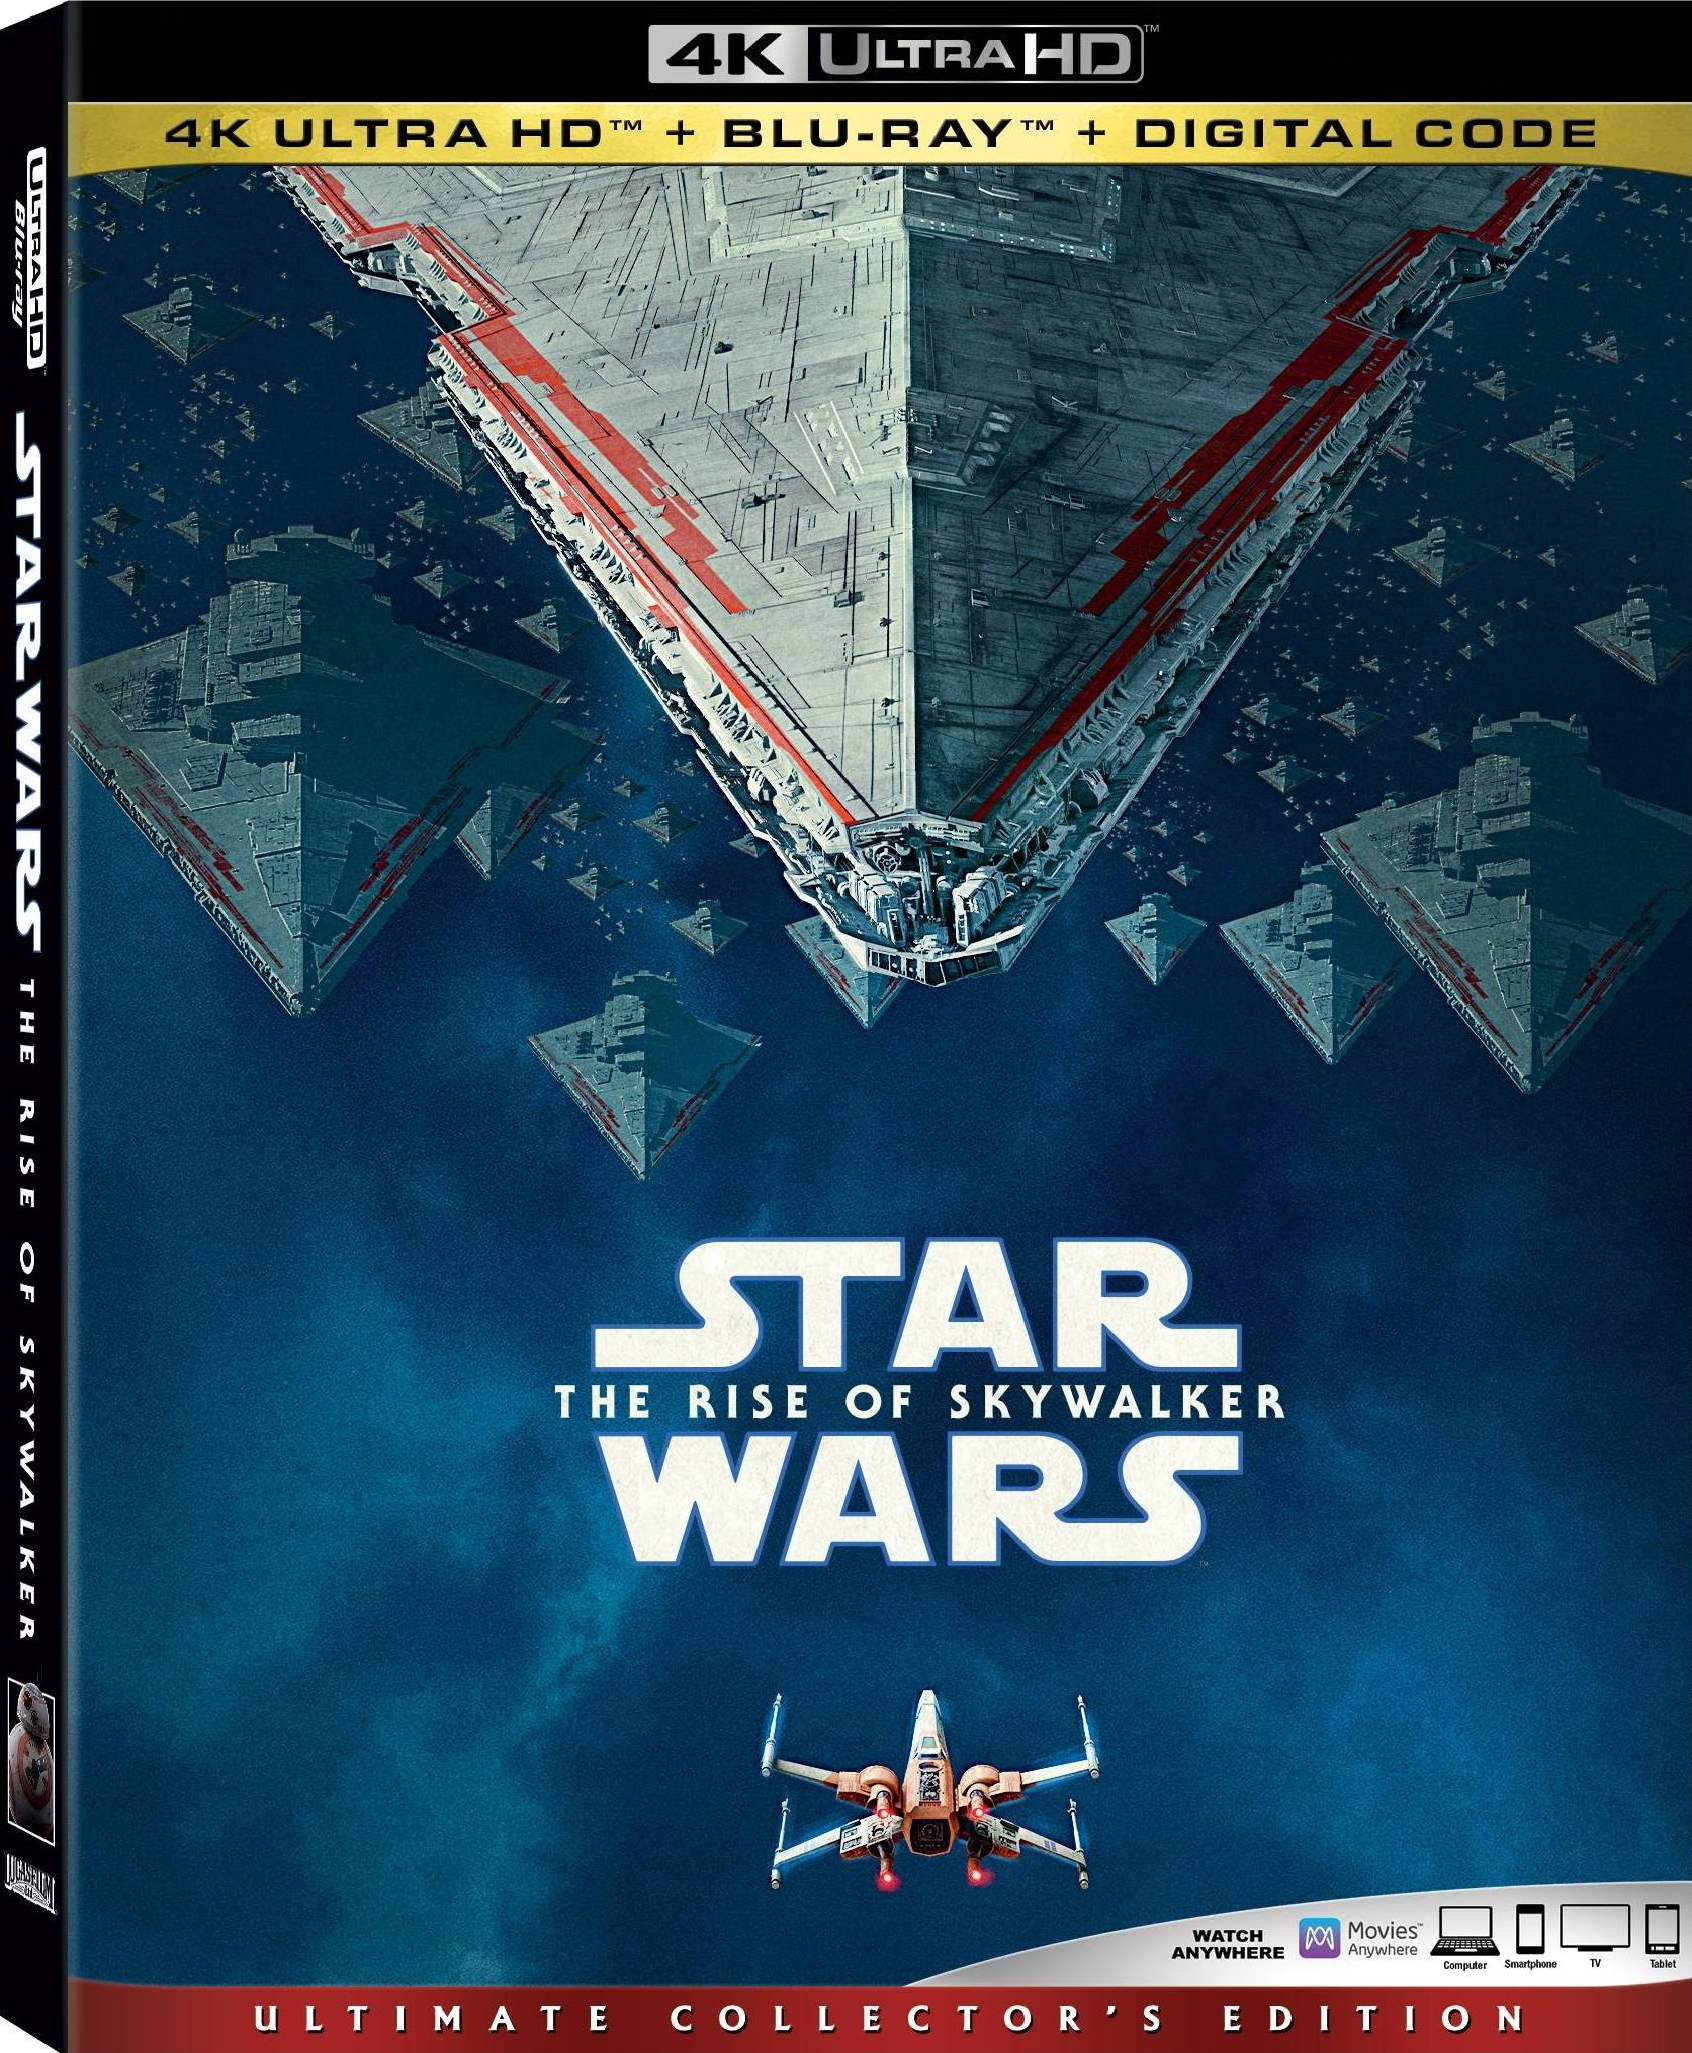 wars - Star Wars: Episode IX - The Rise of Skywalker (2019) Star Wars: El Ascenso de Skywalker (2019) [E-AC3 7.1 + SUP] [4K UHD Blu Ray-Rip] [GOOGLEDRIVE*] 255605_front